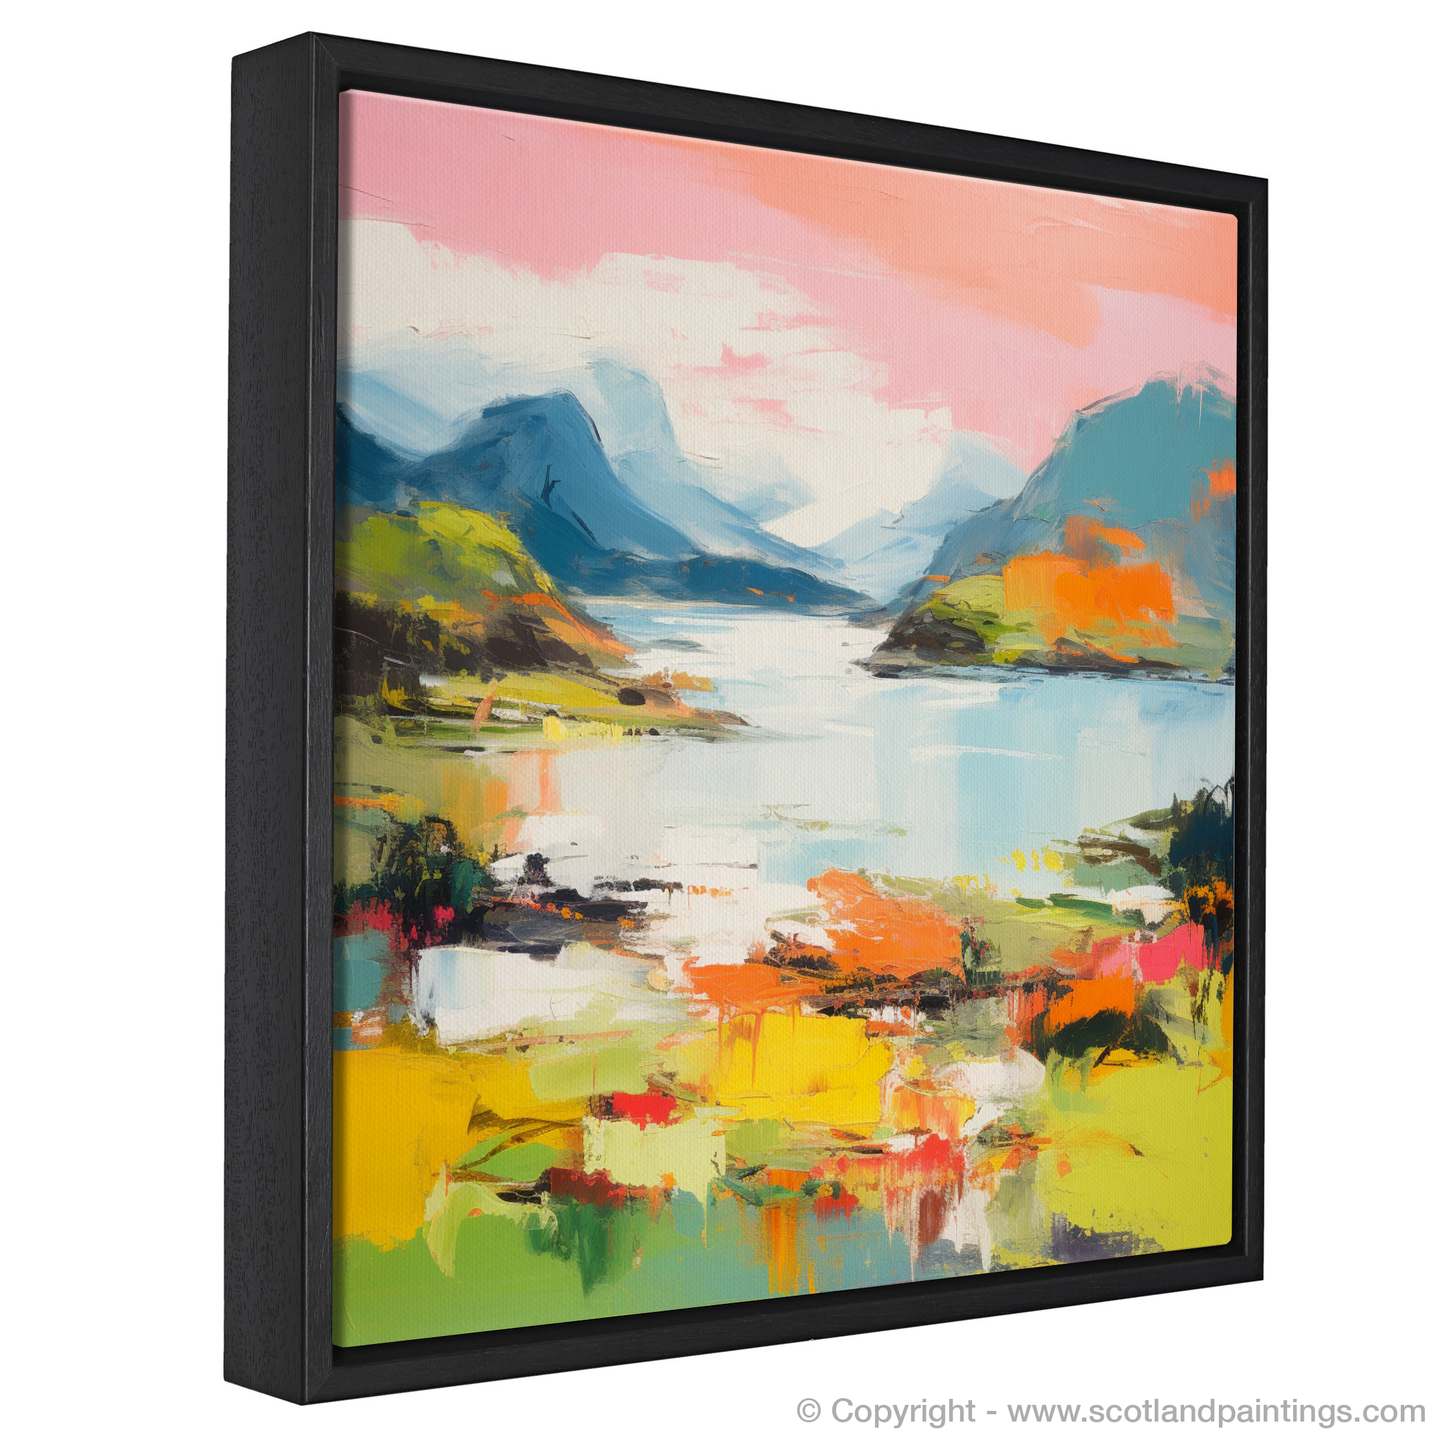 Painting and Art Print of Loch Morar, Highlands in summer entitled "Highland Breeze: A Kaleidoscope of Summer at Loch Morar".